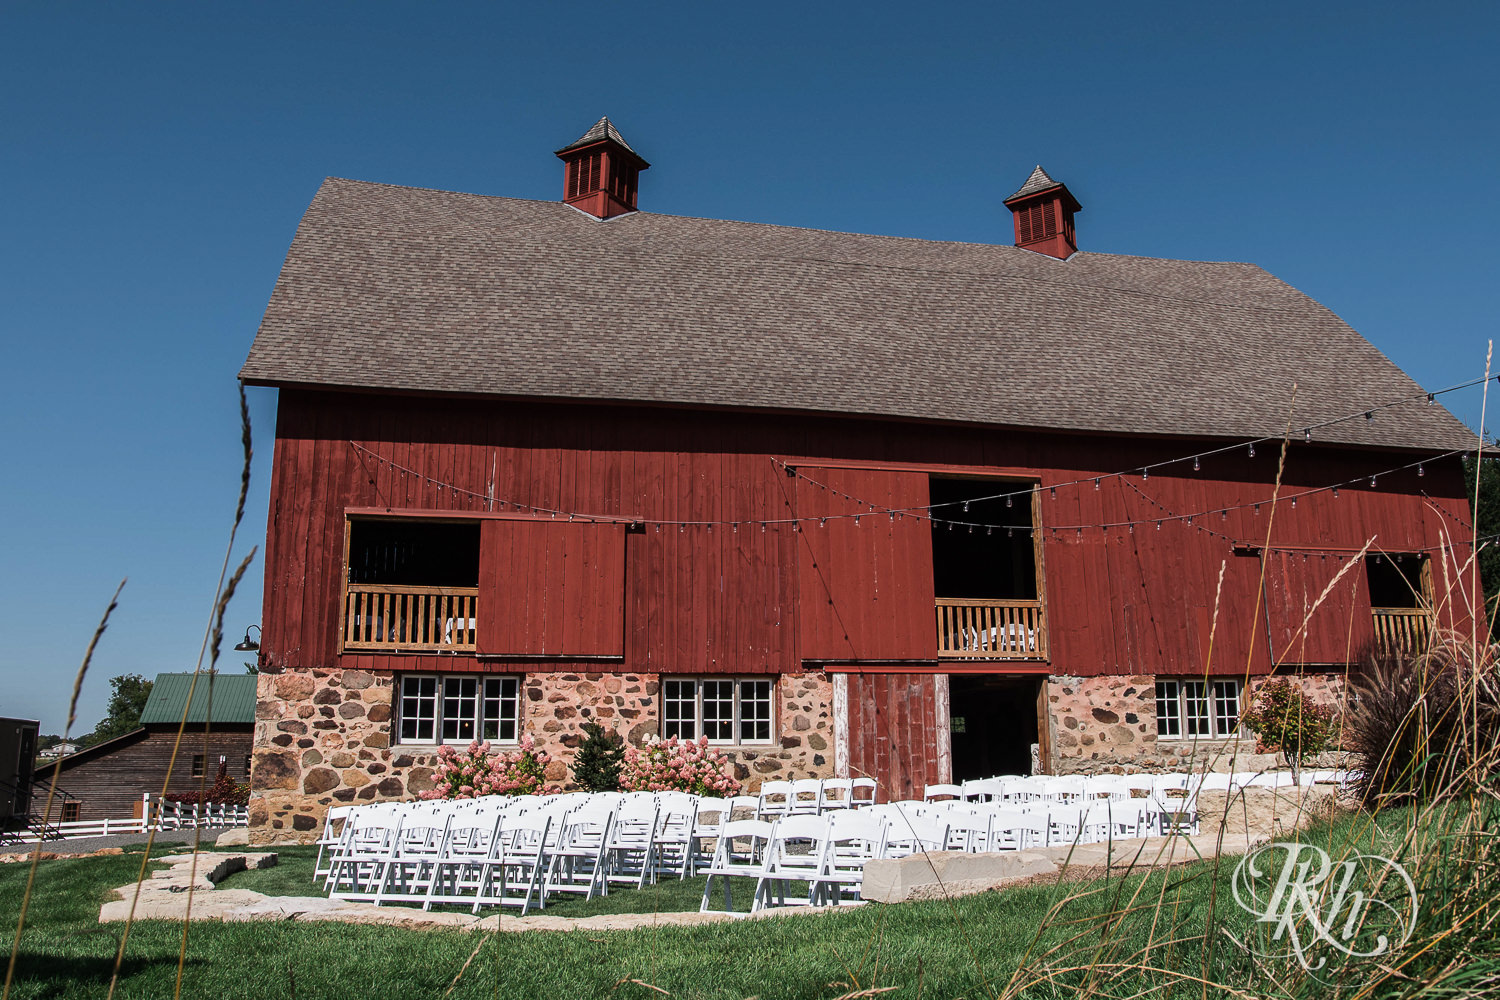 Outdoor barn wedding ceremony setup at Birch Hill Barn in Glenwood City, Wisconsin.